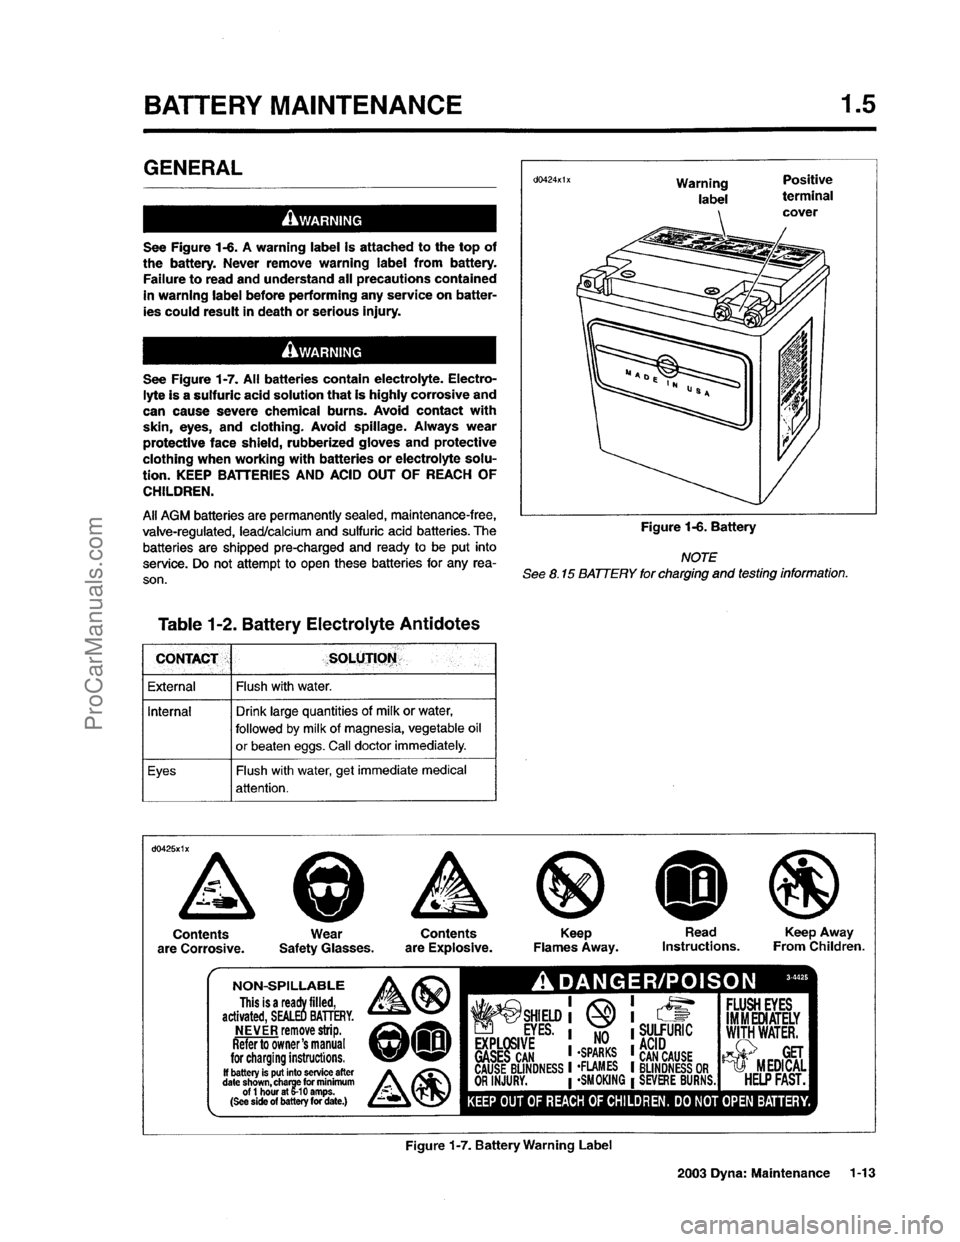 HARLEY-DAVIDSON DYNA GLIDE 2003 Owners Manual  [15]
ProCarManuals.com 